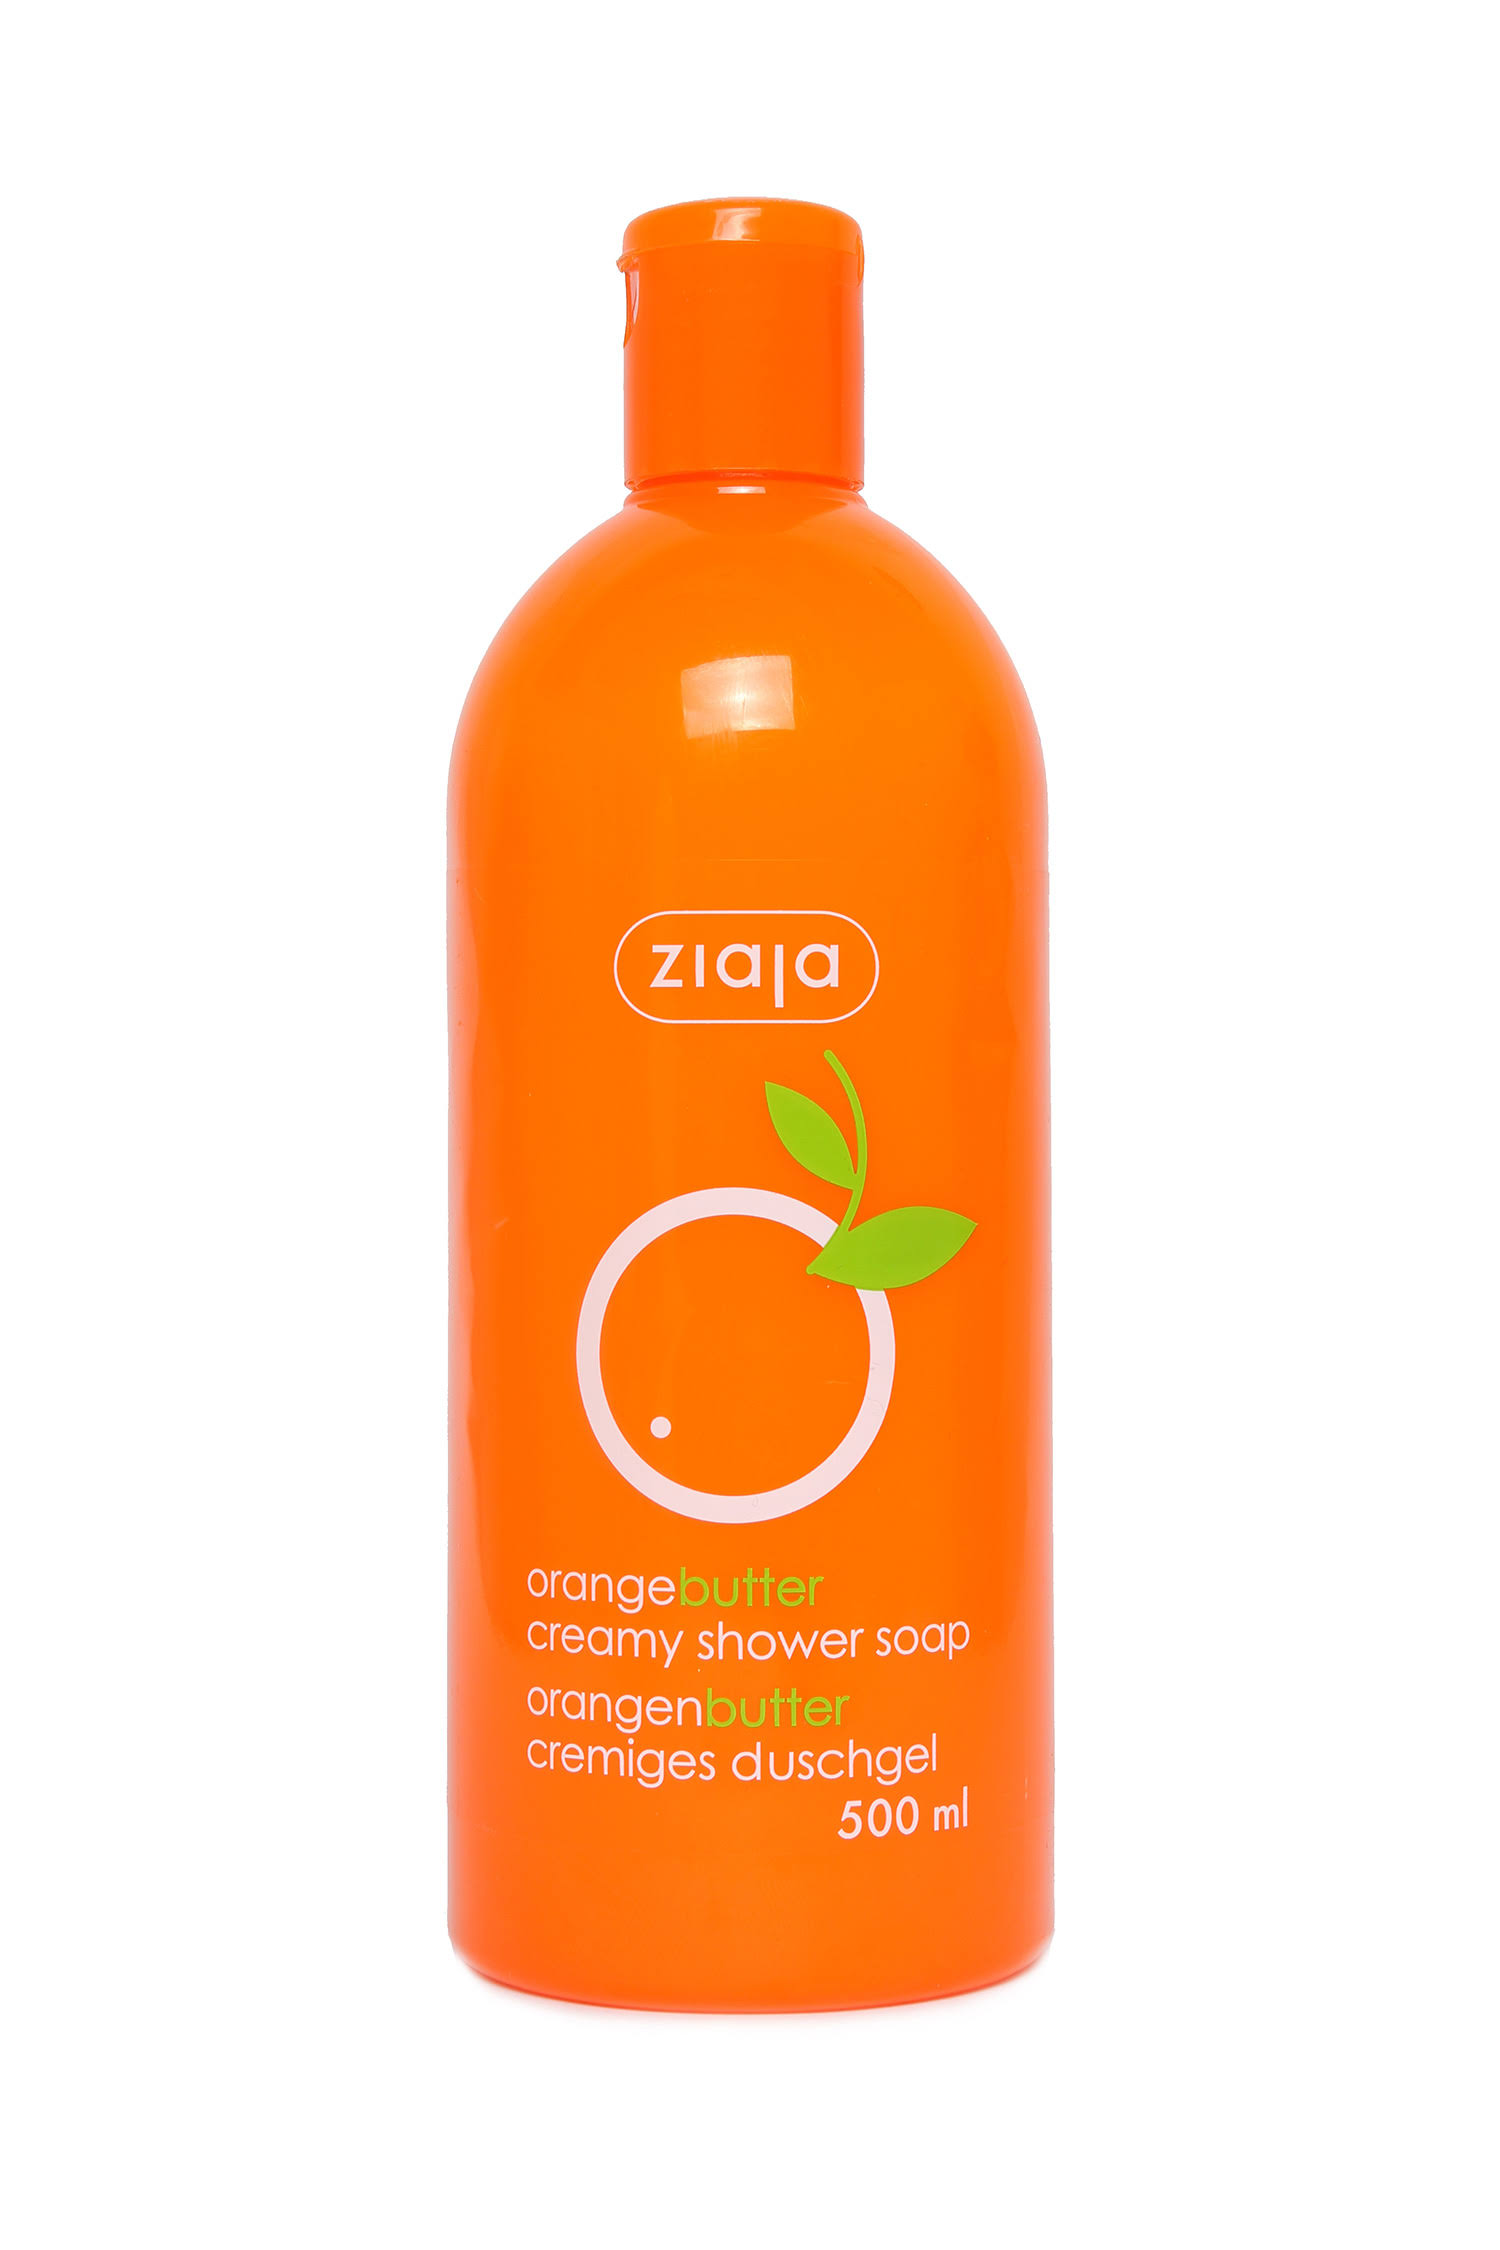 Ziaja Creamy Shower Soap - Orange Butter, 500ml